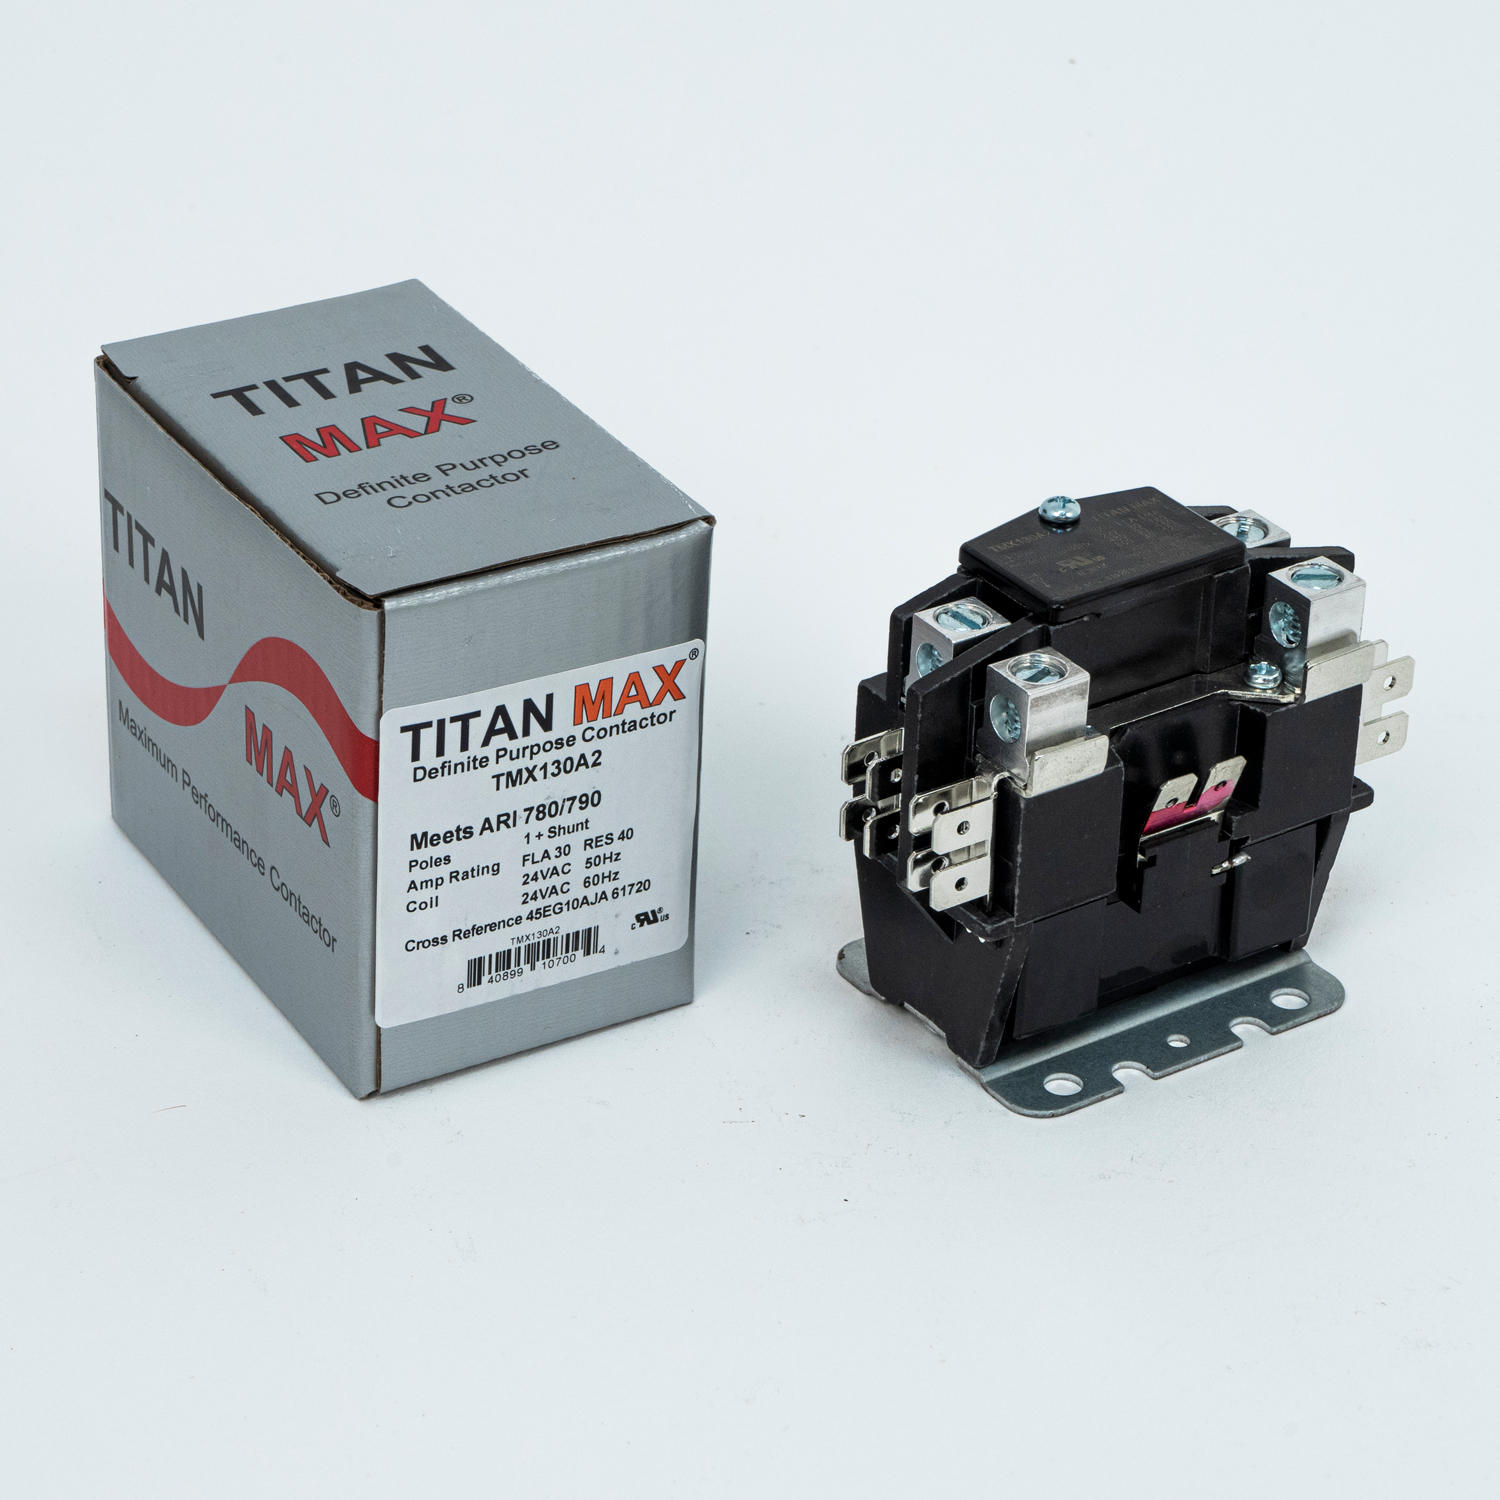 Furnas Titan Max Dp Contactor 1 Pole 30 Amp 24V Coil 45EG10AJA By Titan